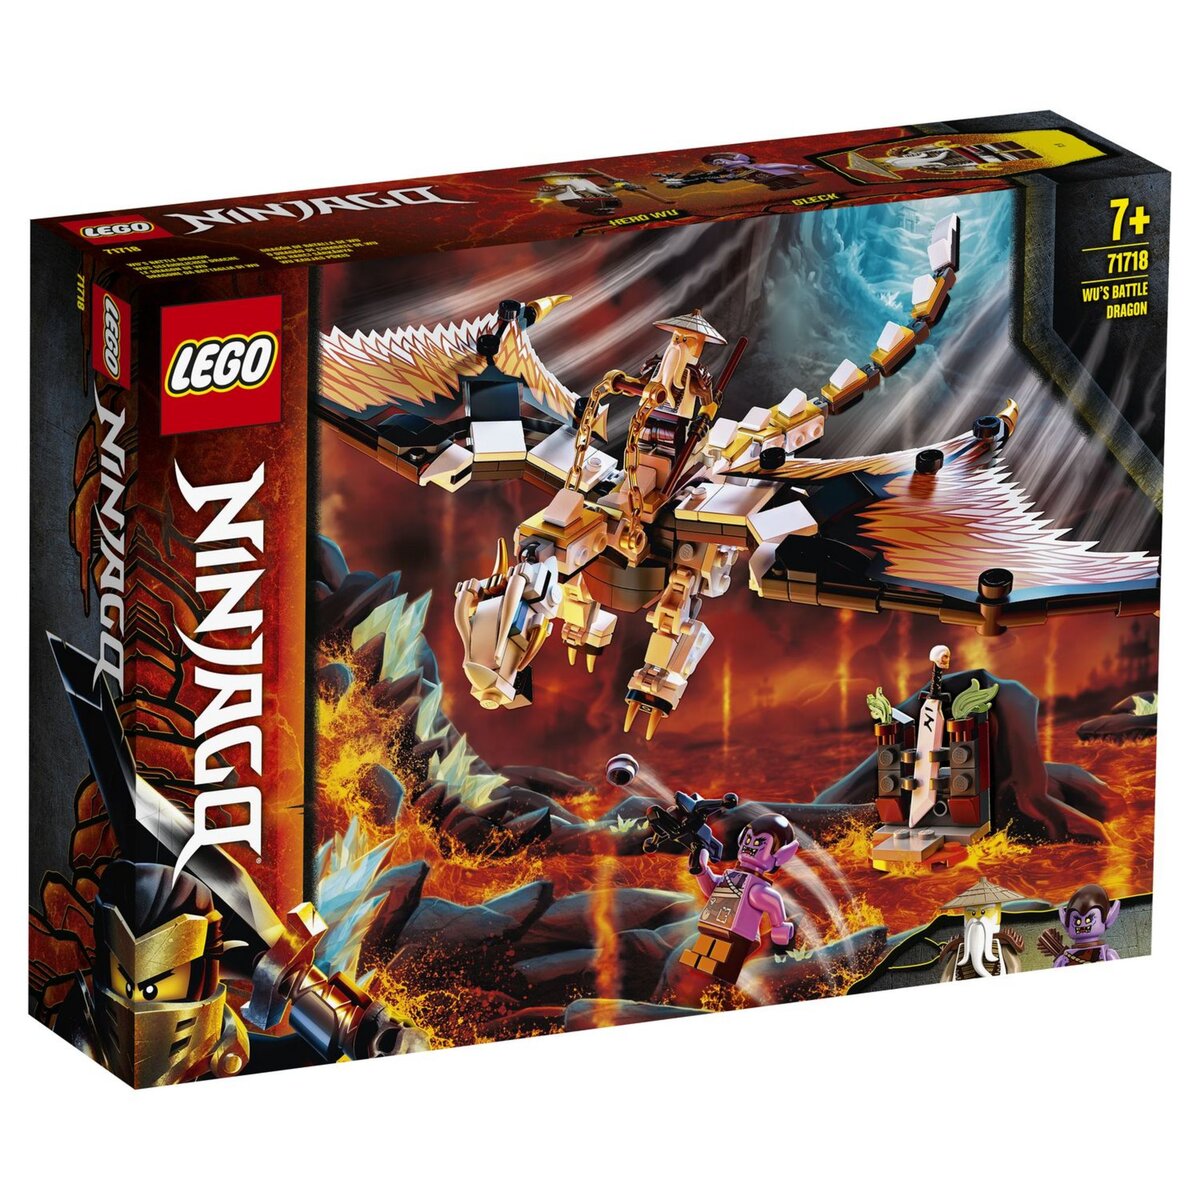 LEGO NINJAGO 71718 - Le dragon de Wu